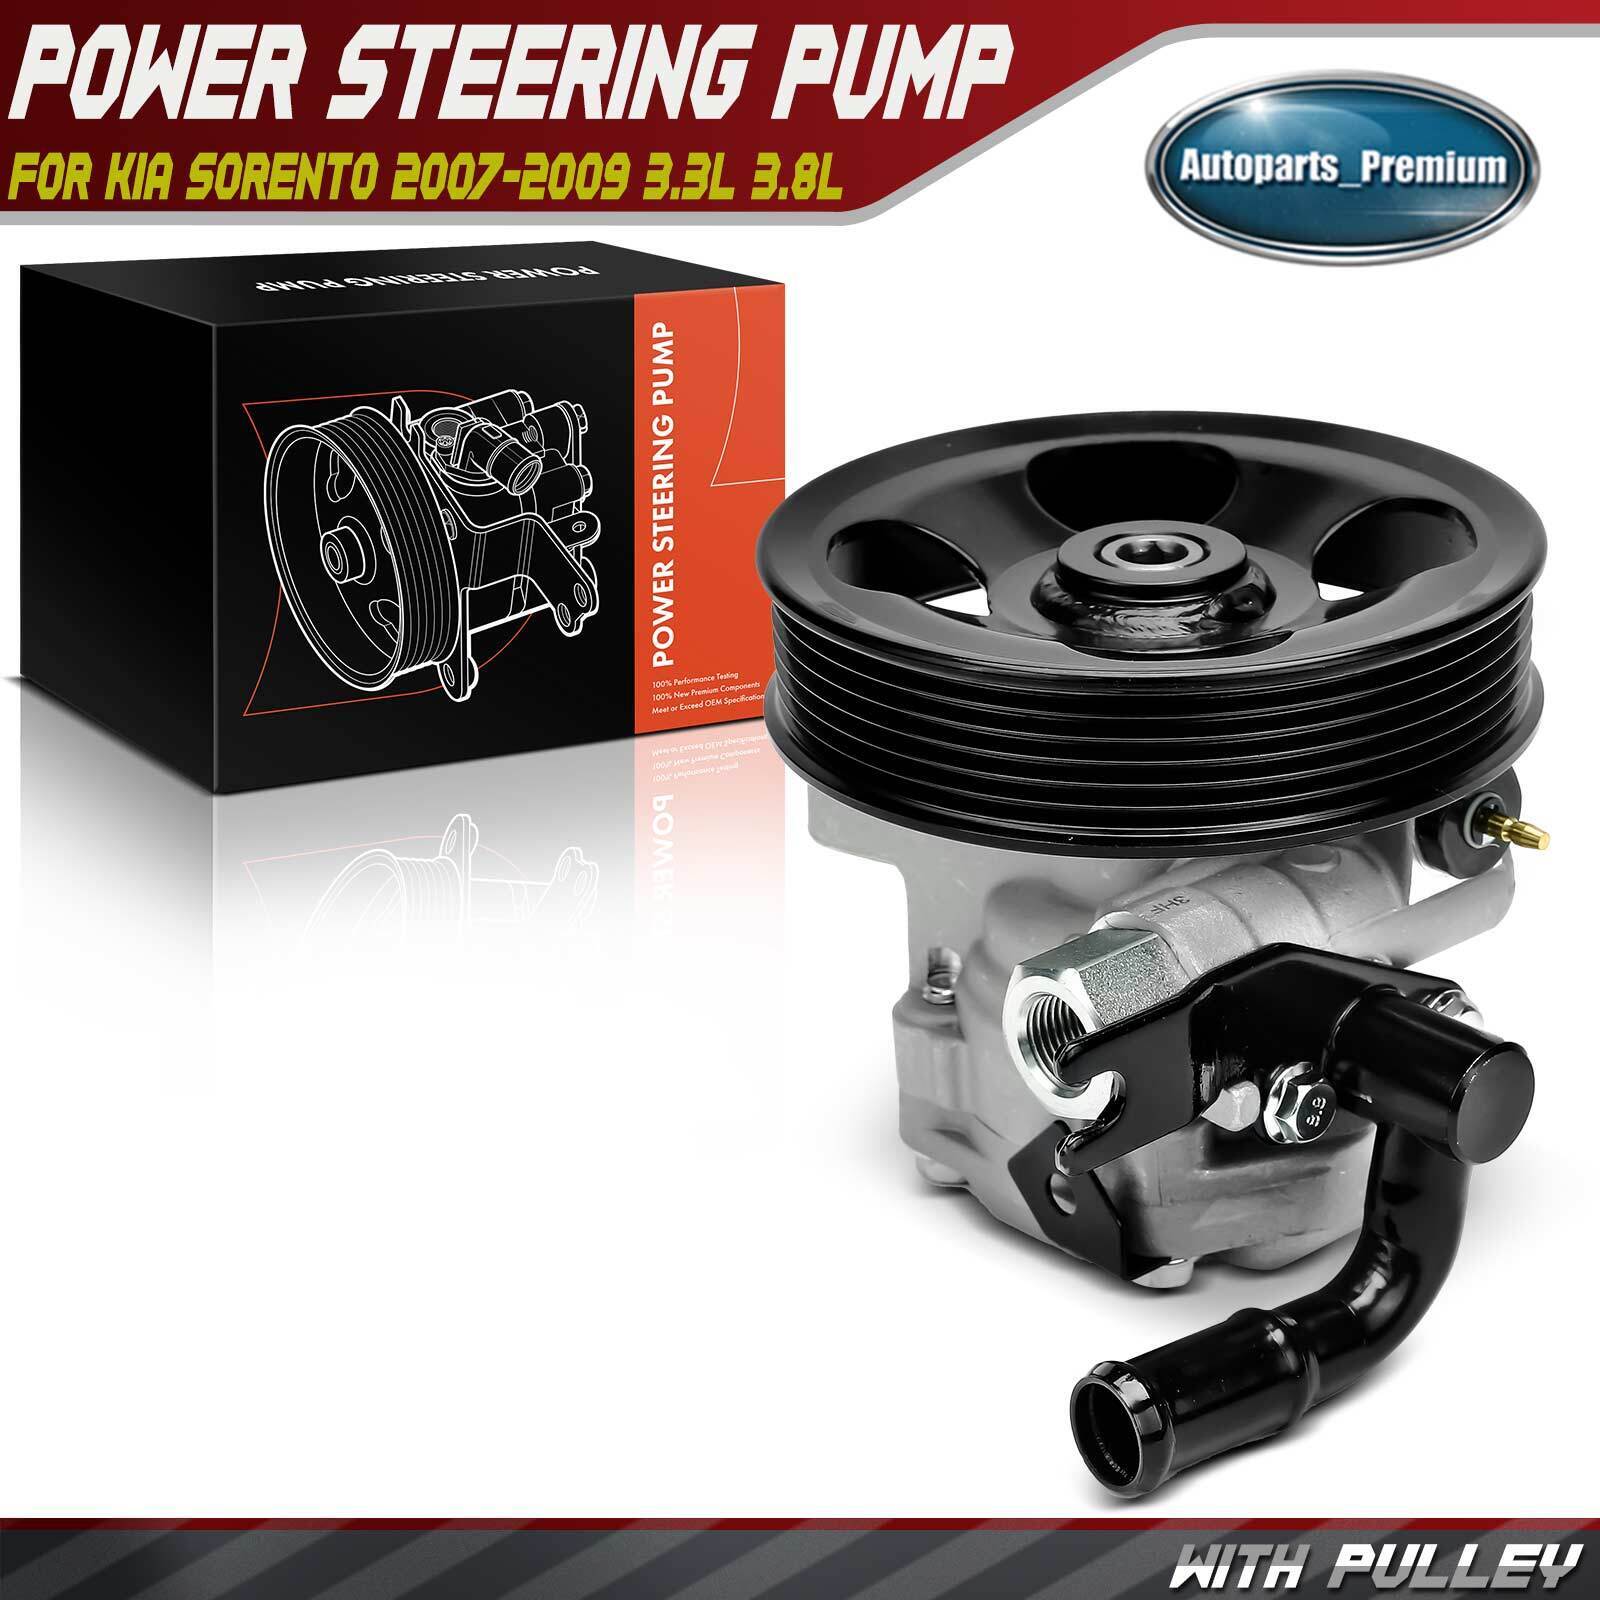 Brand New Power Steering Pump w/ Pulley for Kia Sorento 2007-2009 571003E200